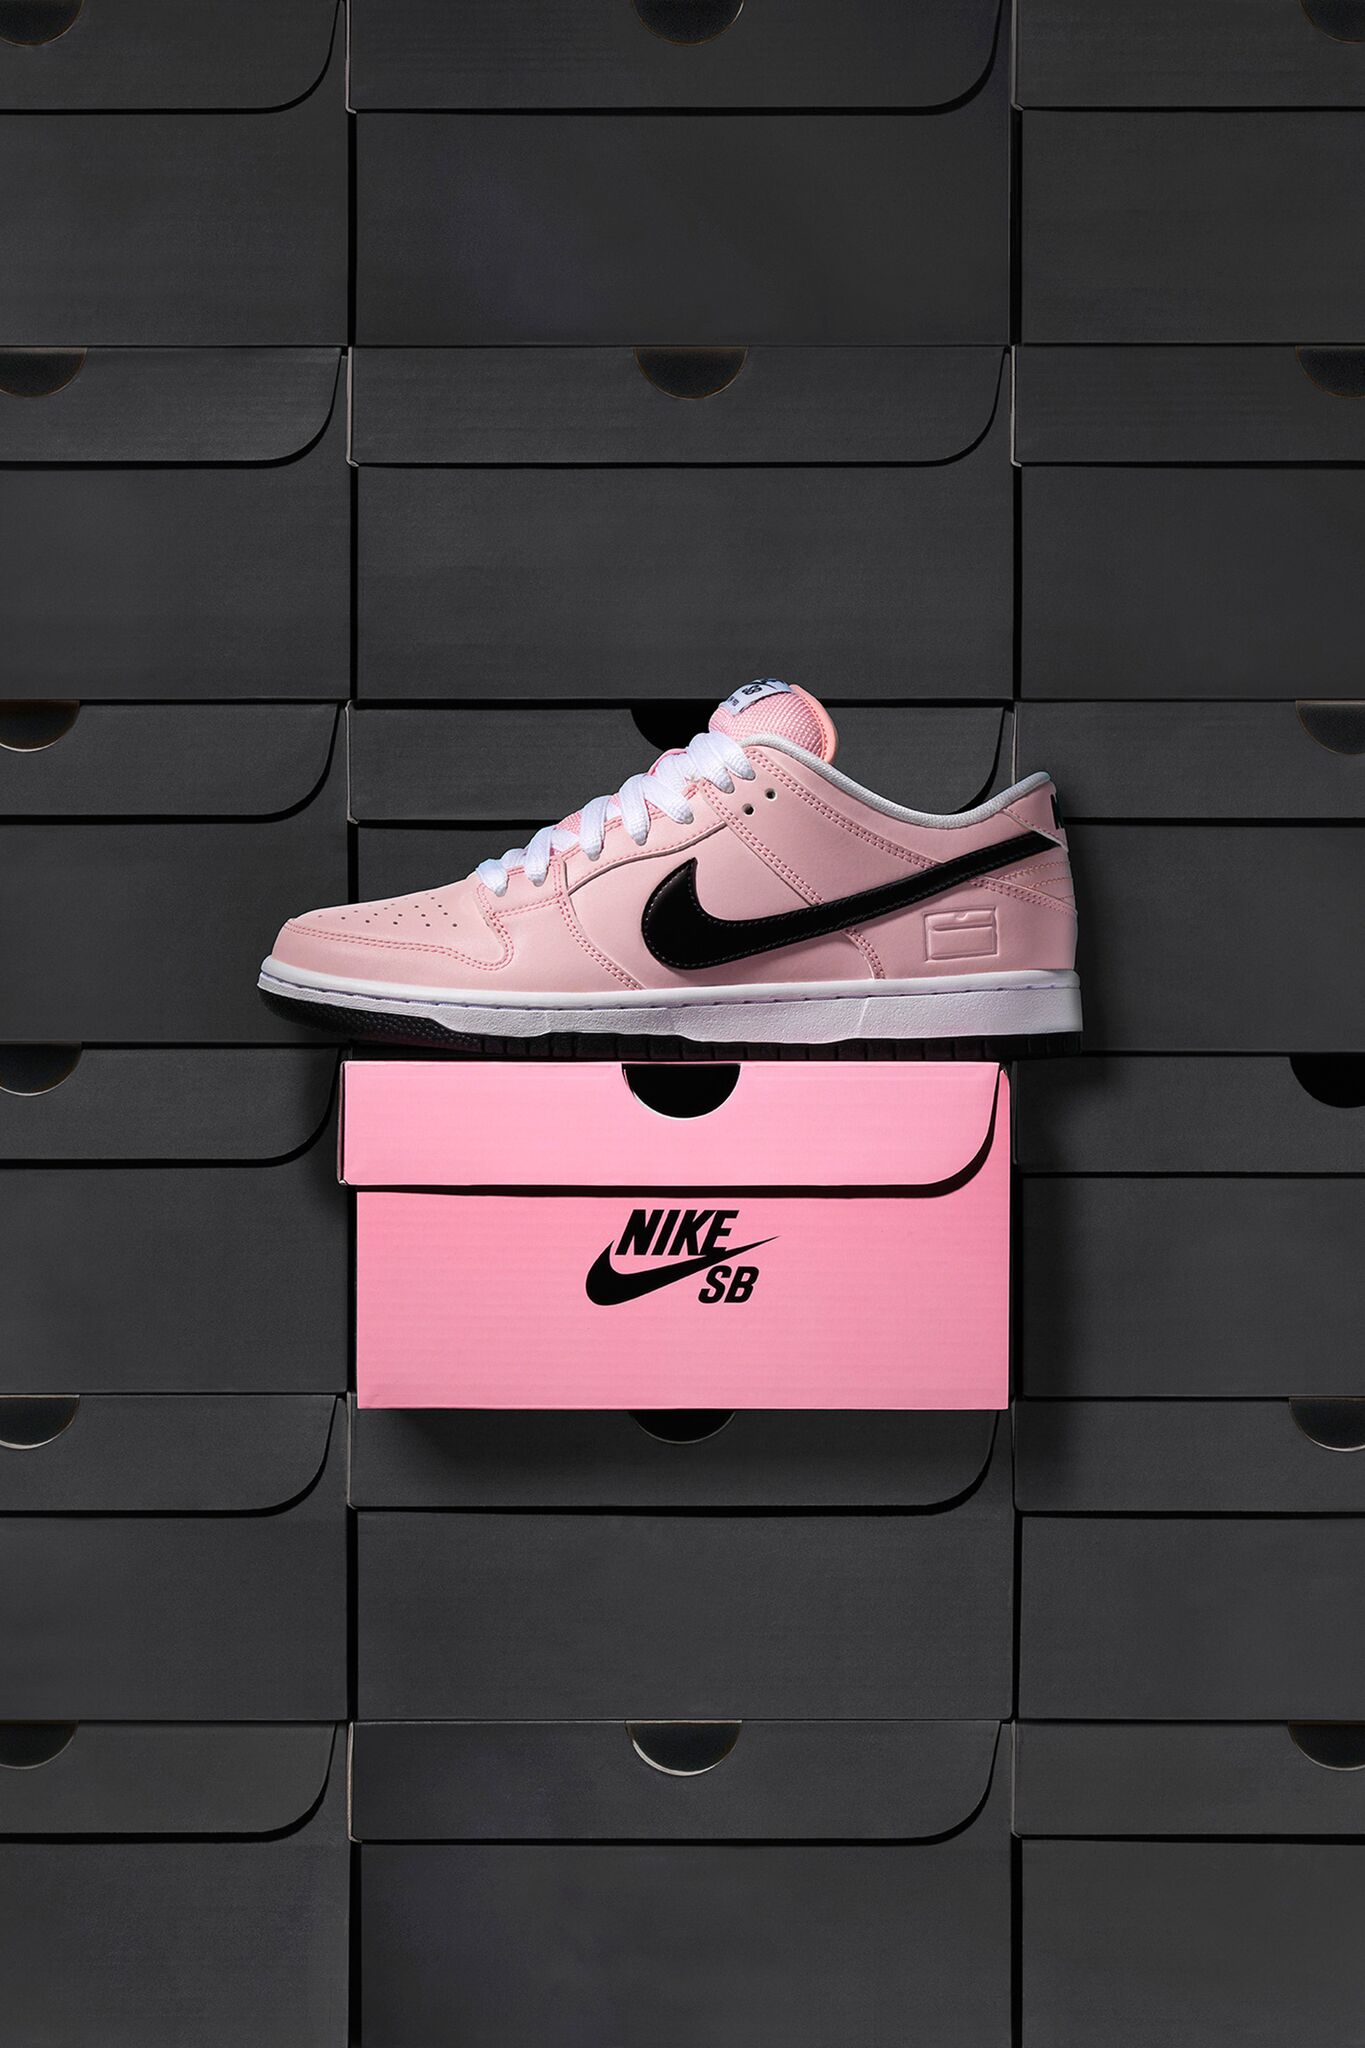 dunk sb pink box